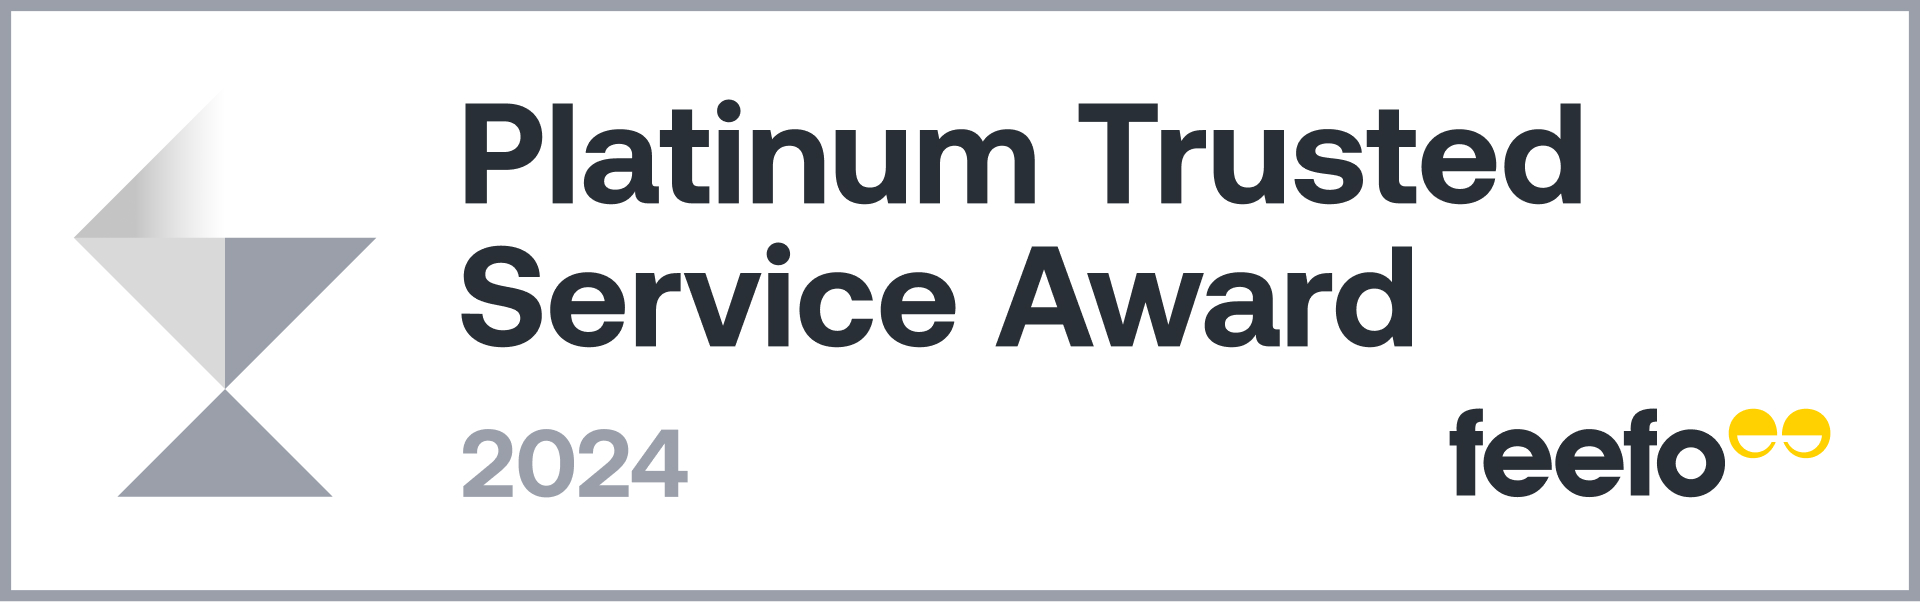 Feefo Platinum Trusted Service Award Badge